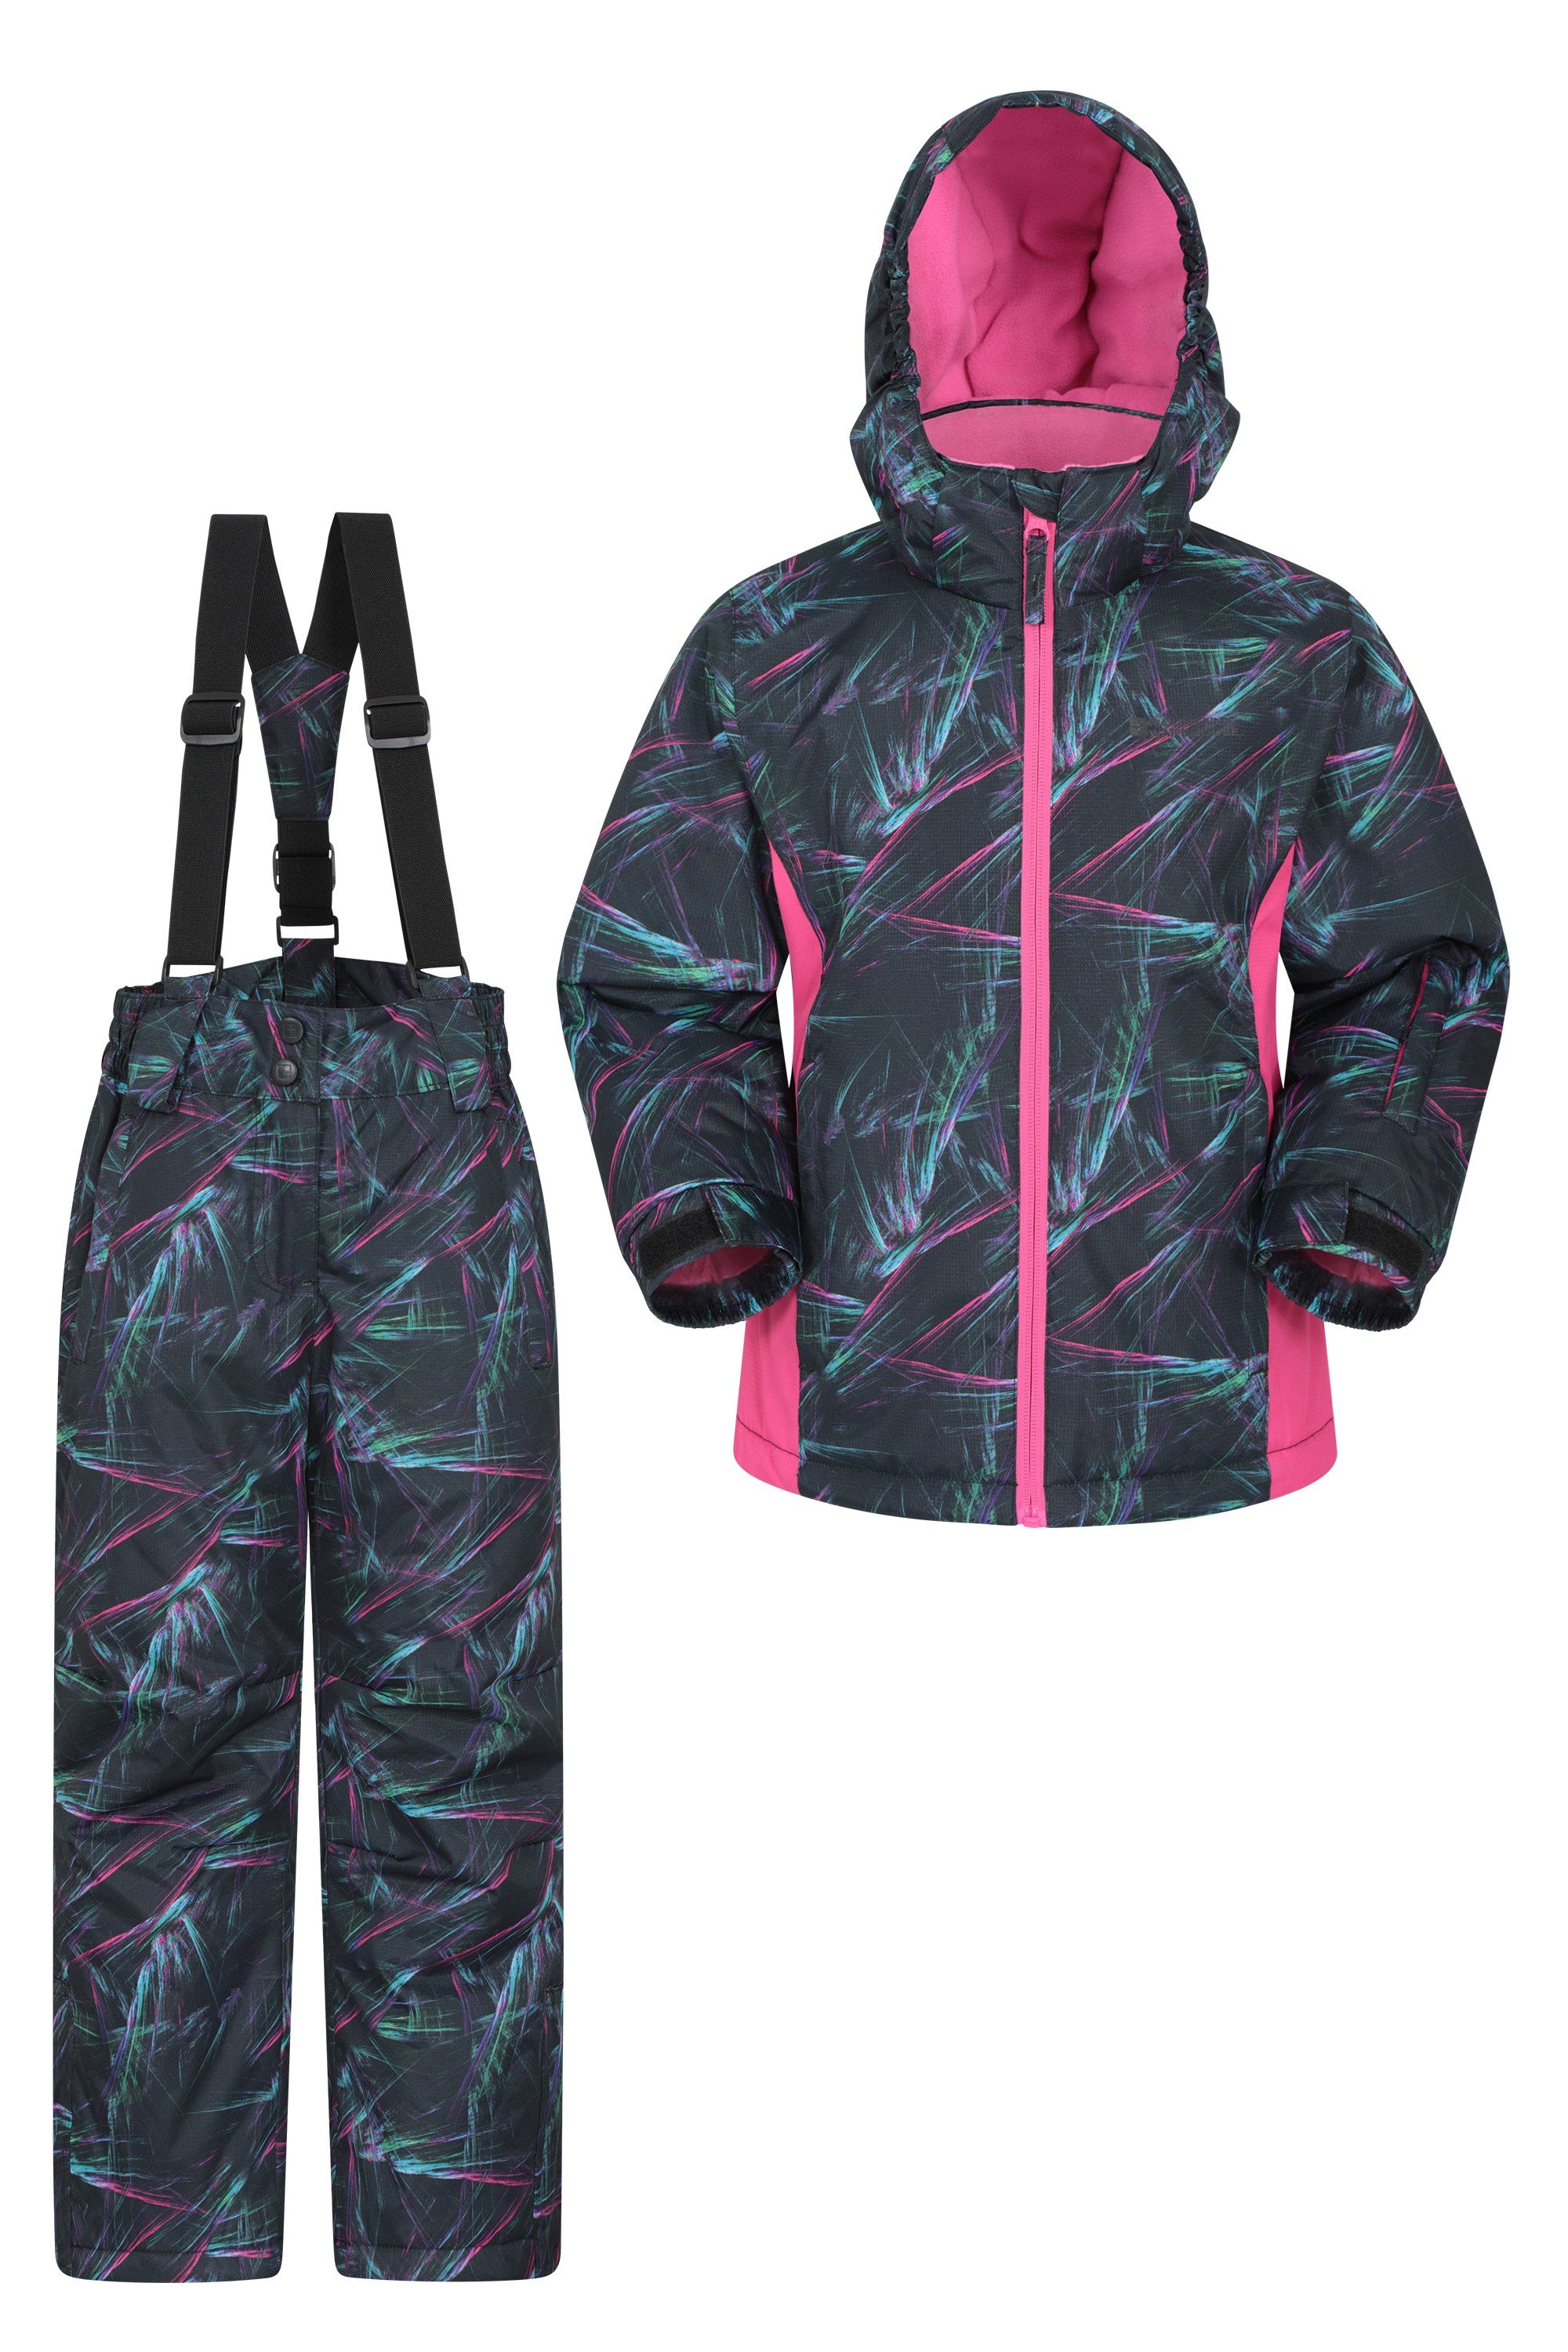 Winter Snowsuit Package Mountain Warehouse Kids Ski Jacket & Pants Set